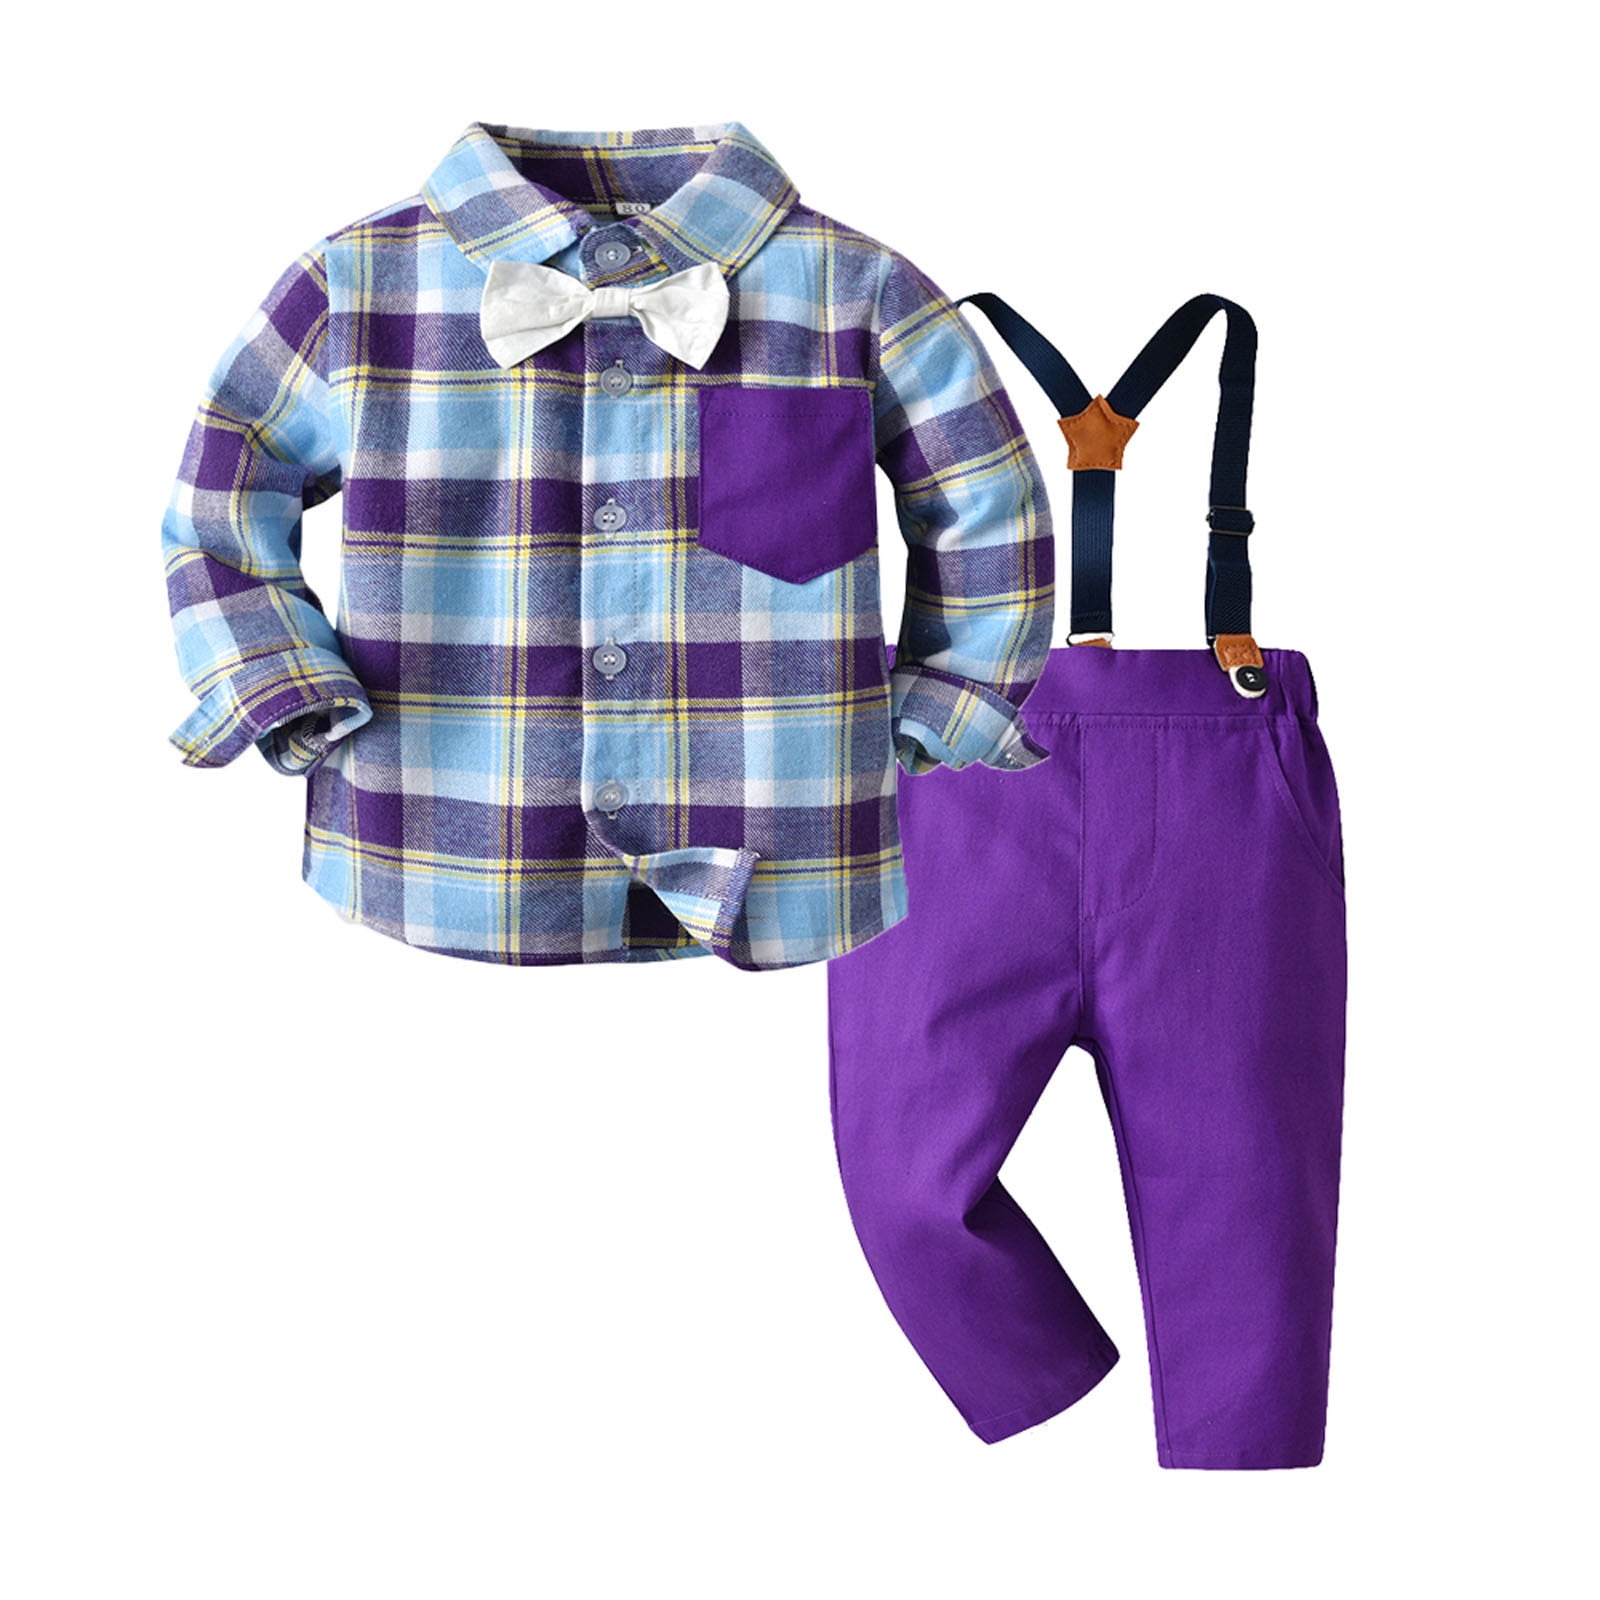 LAPAKIDS Kids Toddler Baby Boy Formal Suit Long Sleeve Gentlemen Bow Tie  Shirts + Vests + Pants Outfit Sets 4-5T - Walmart.com